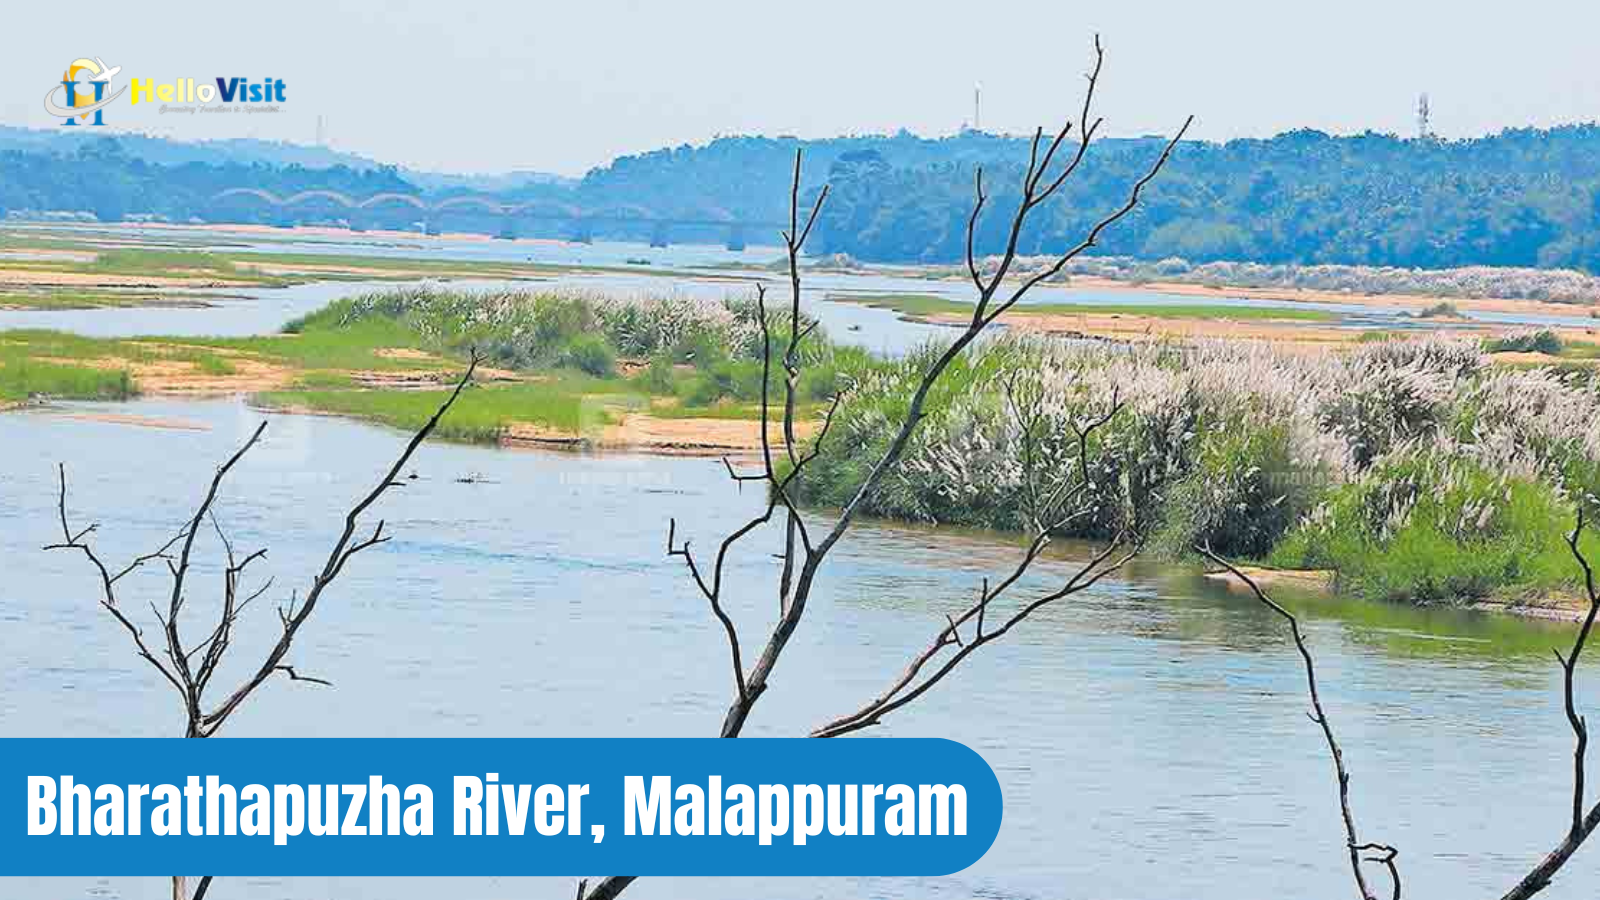 Bharathapuzha River, Malappuram